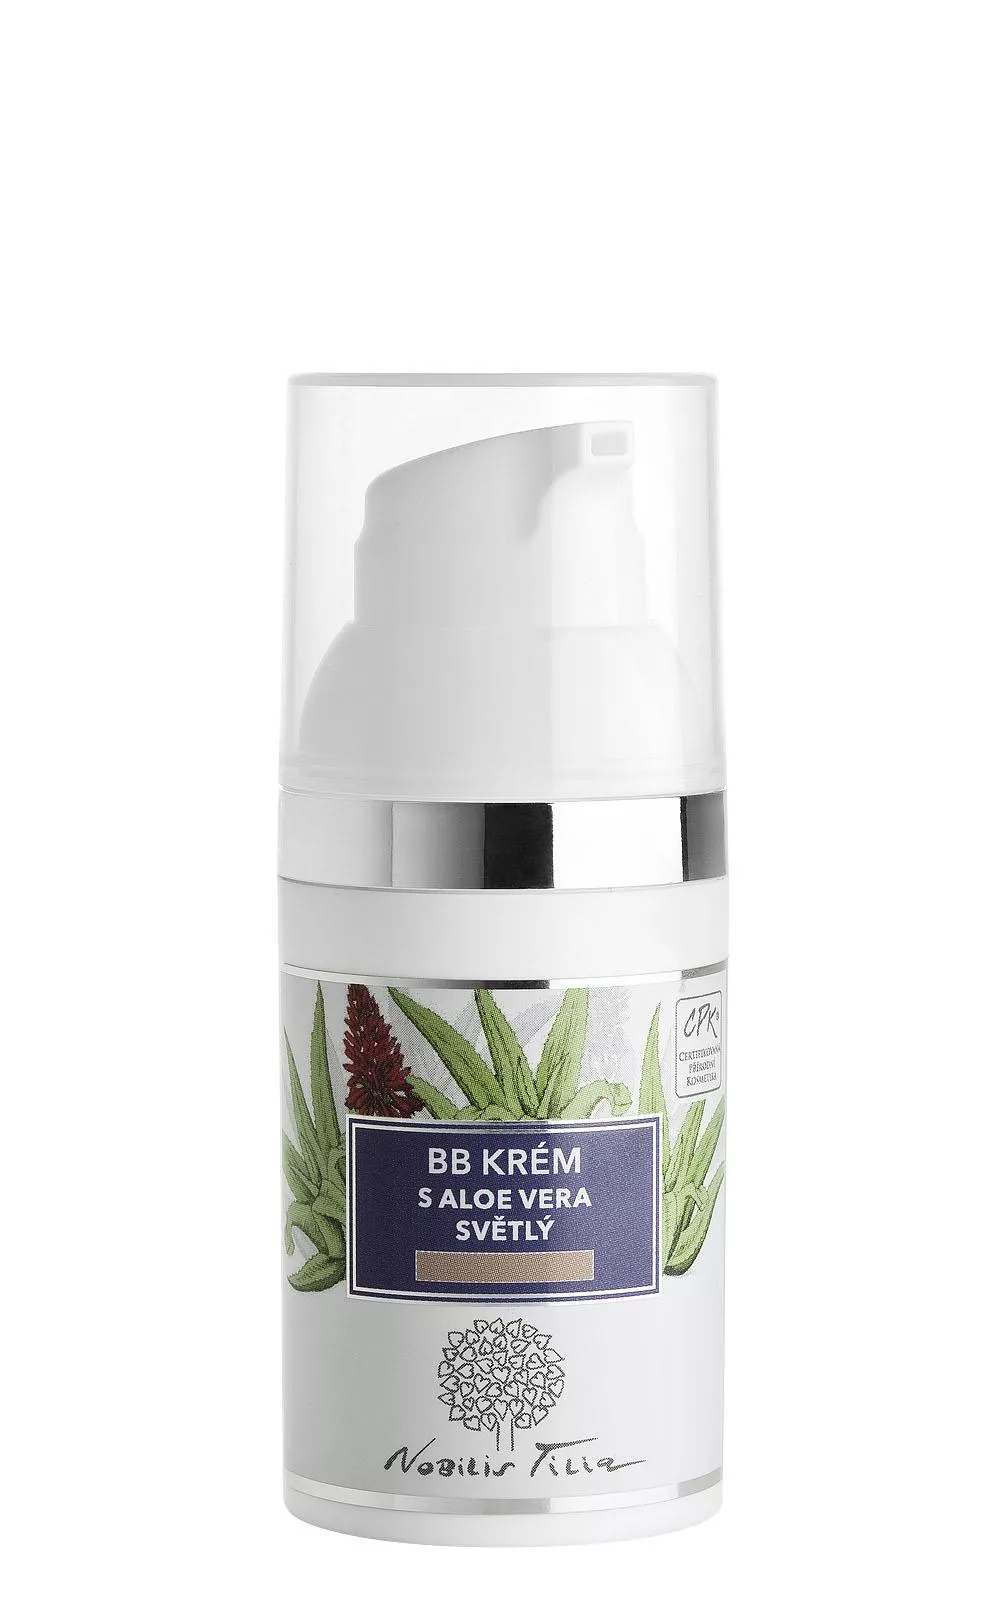 Nobilis Tilia BB creme med Aloe vera light 30ml